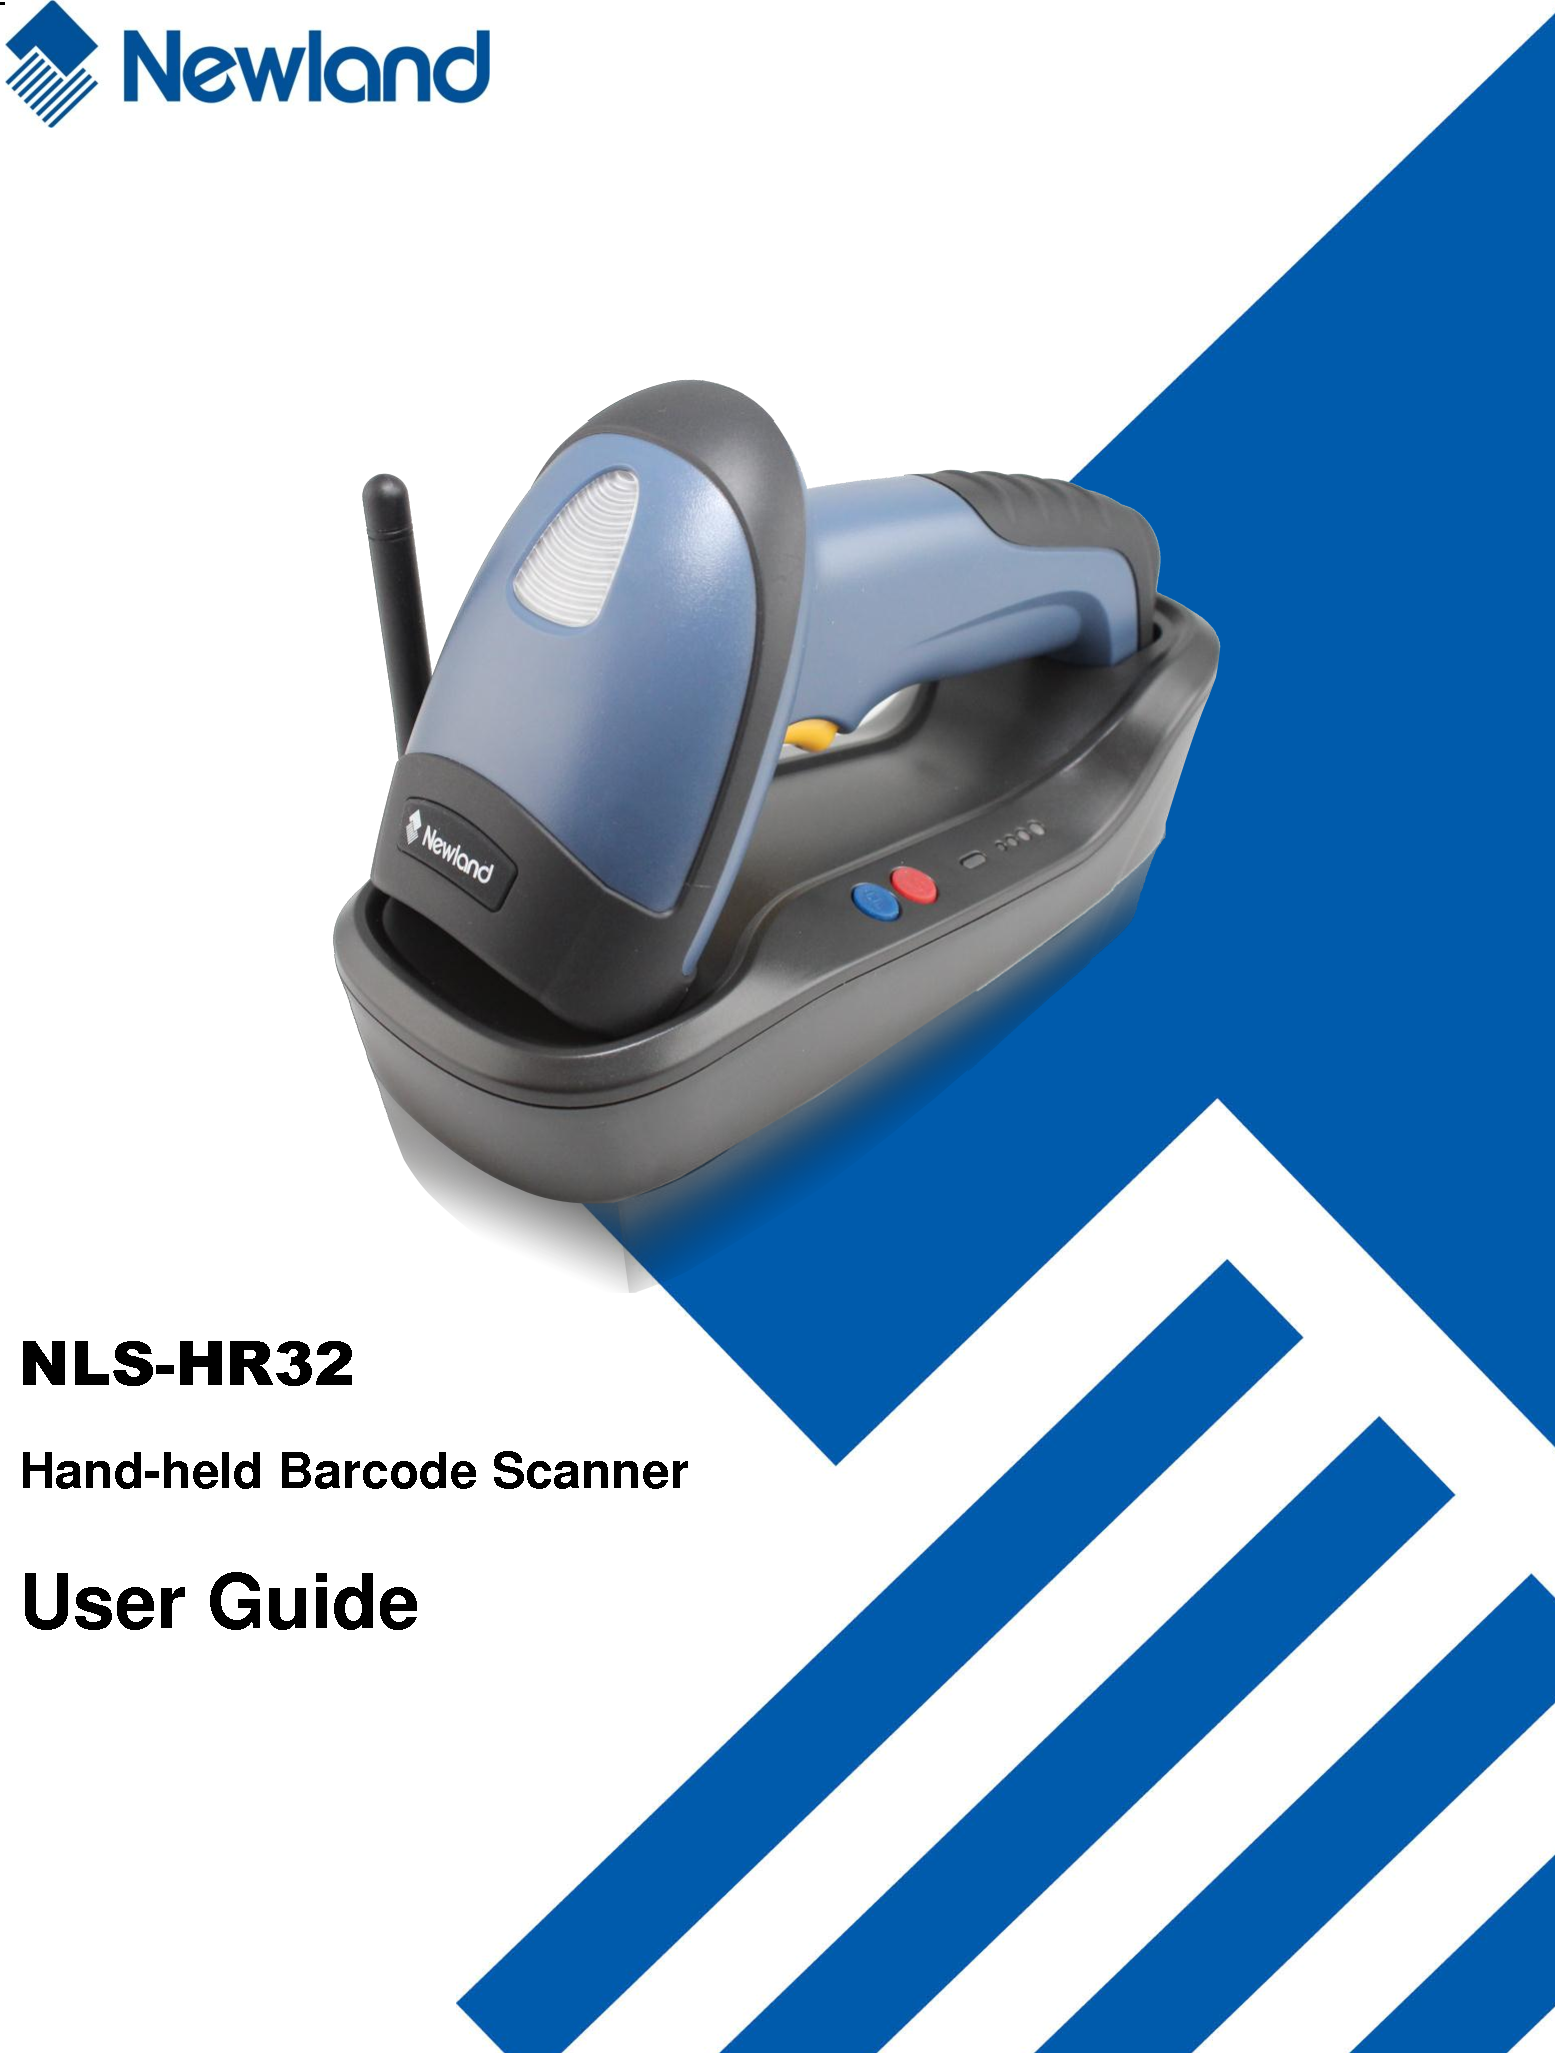            NLS-HR32 Hand-held Barcode Scanner User Guide 